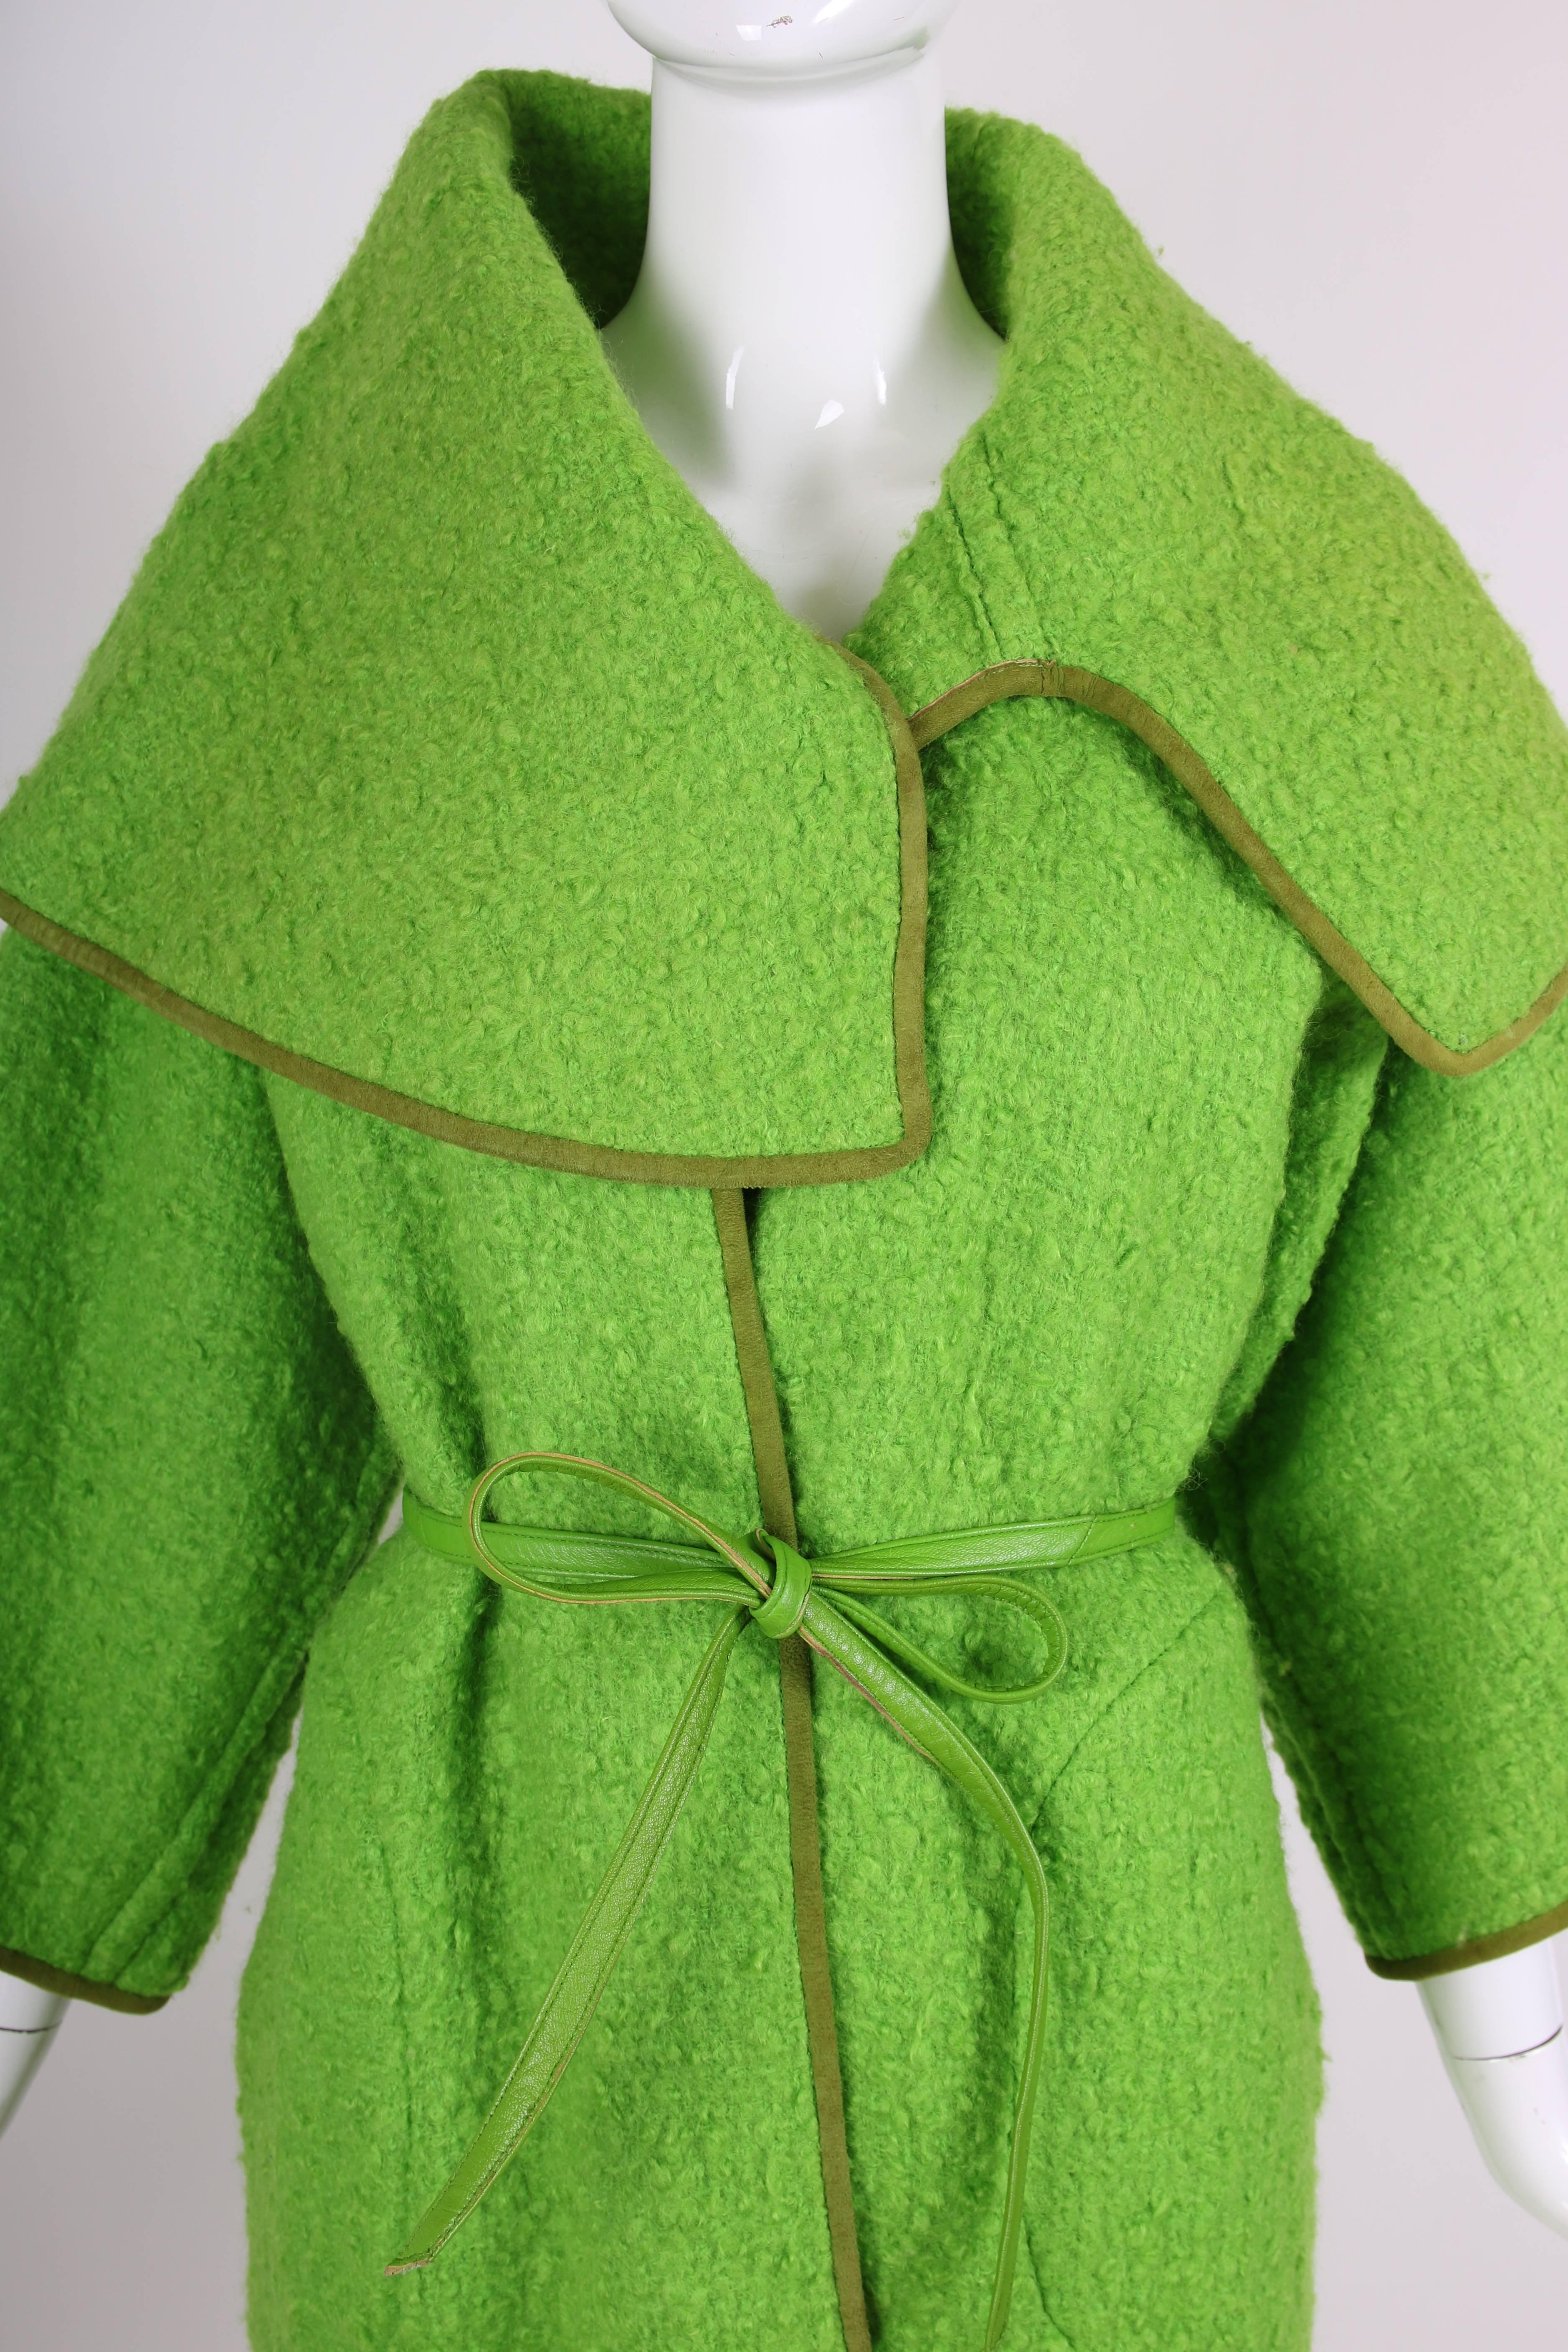 Bonnie Cashin for Sills Lime Green Boucle Wool Coat circa 1960s 1